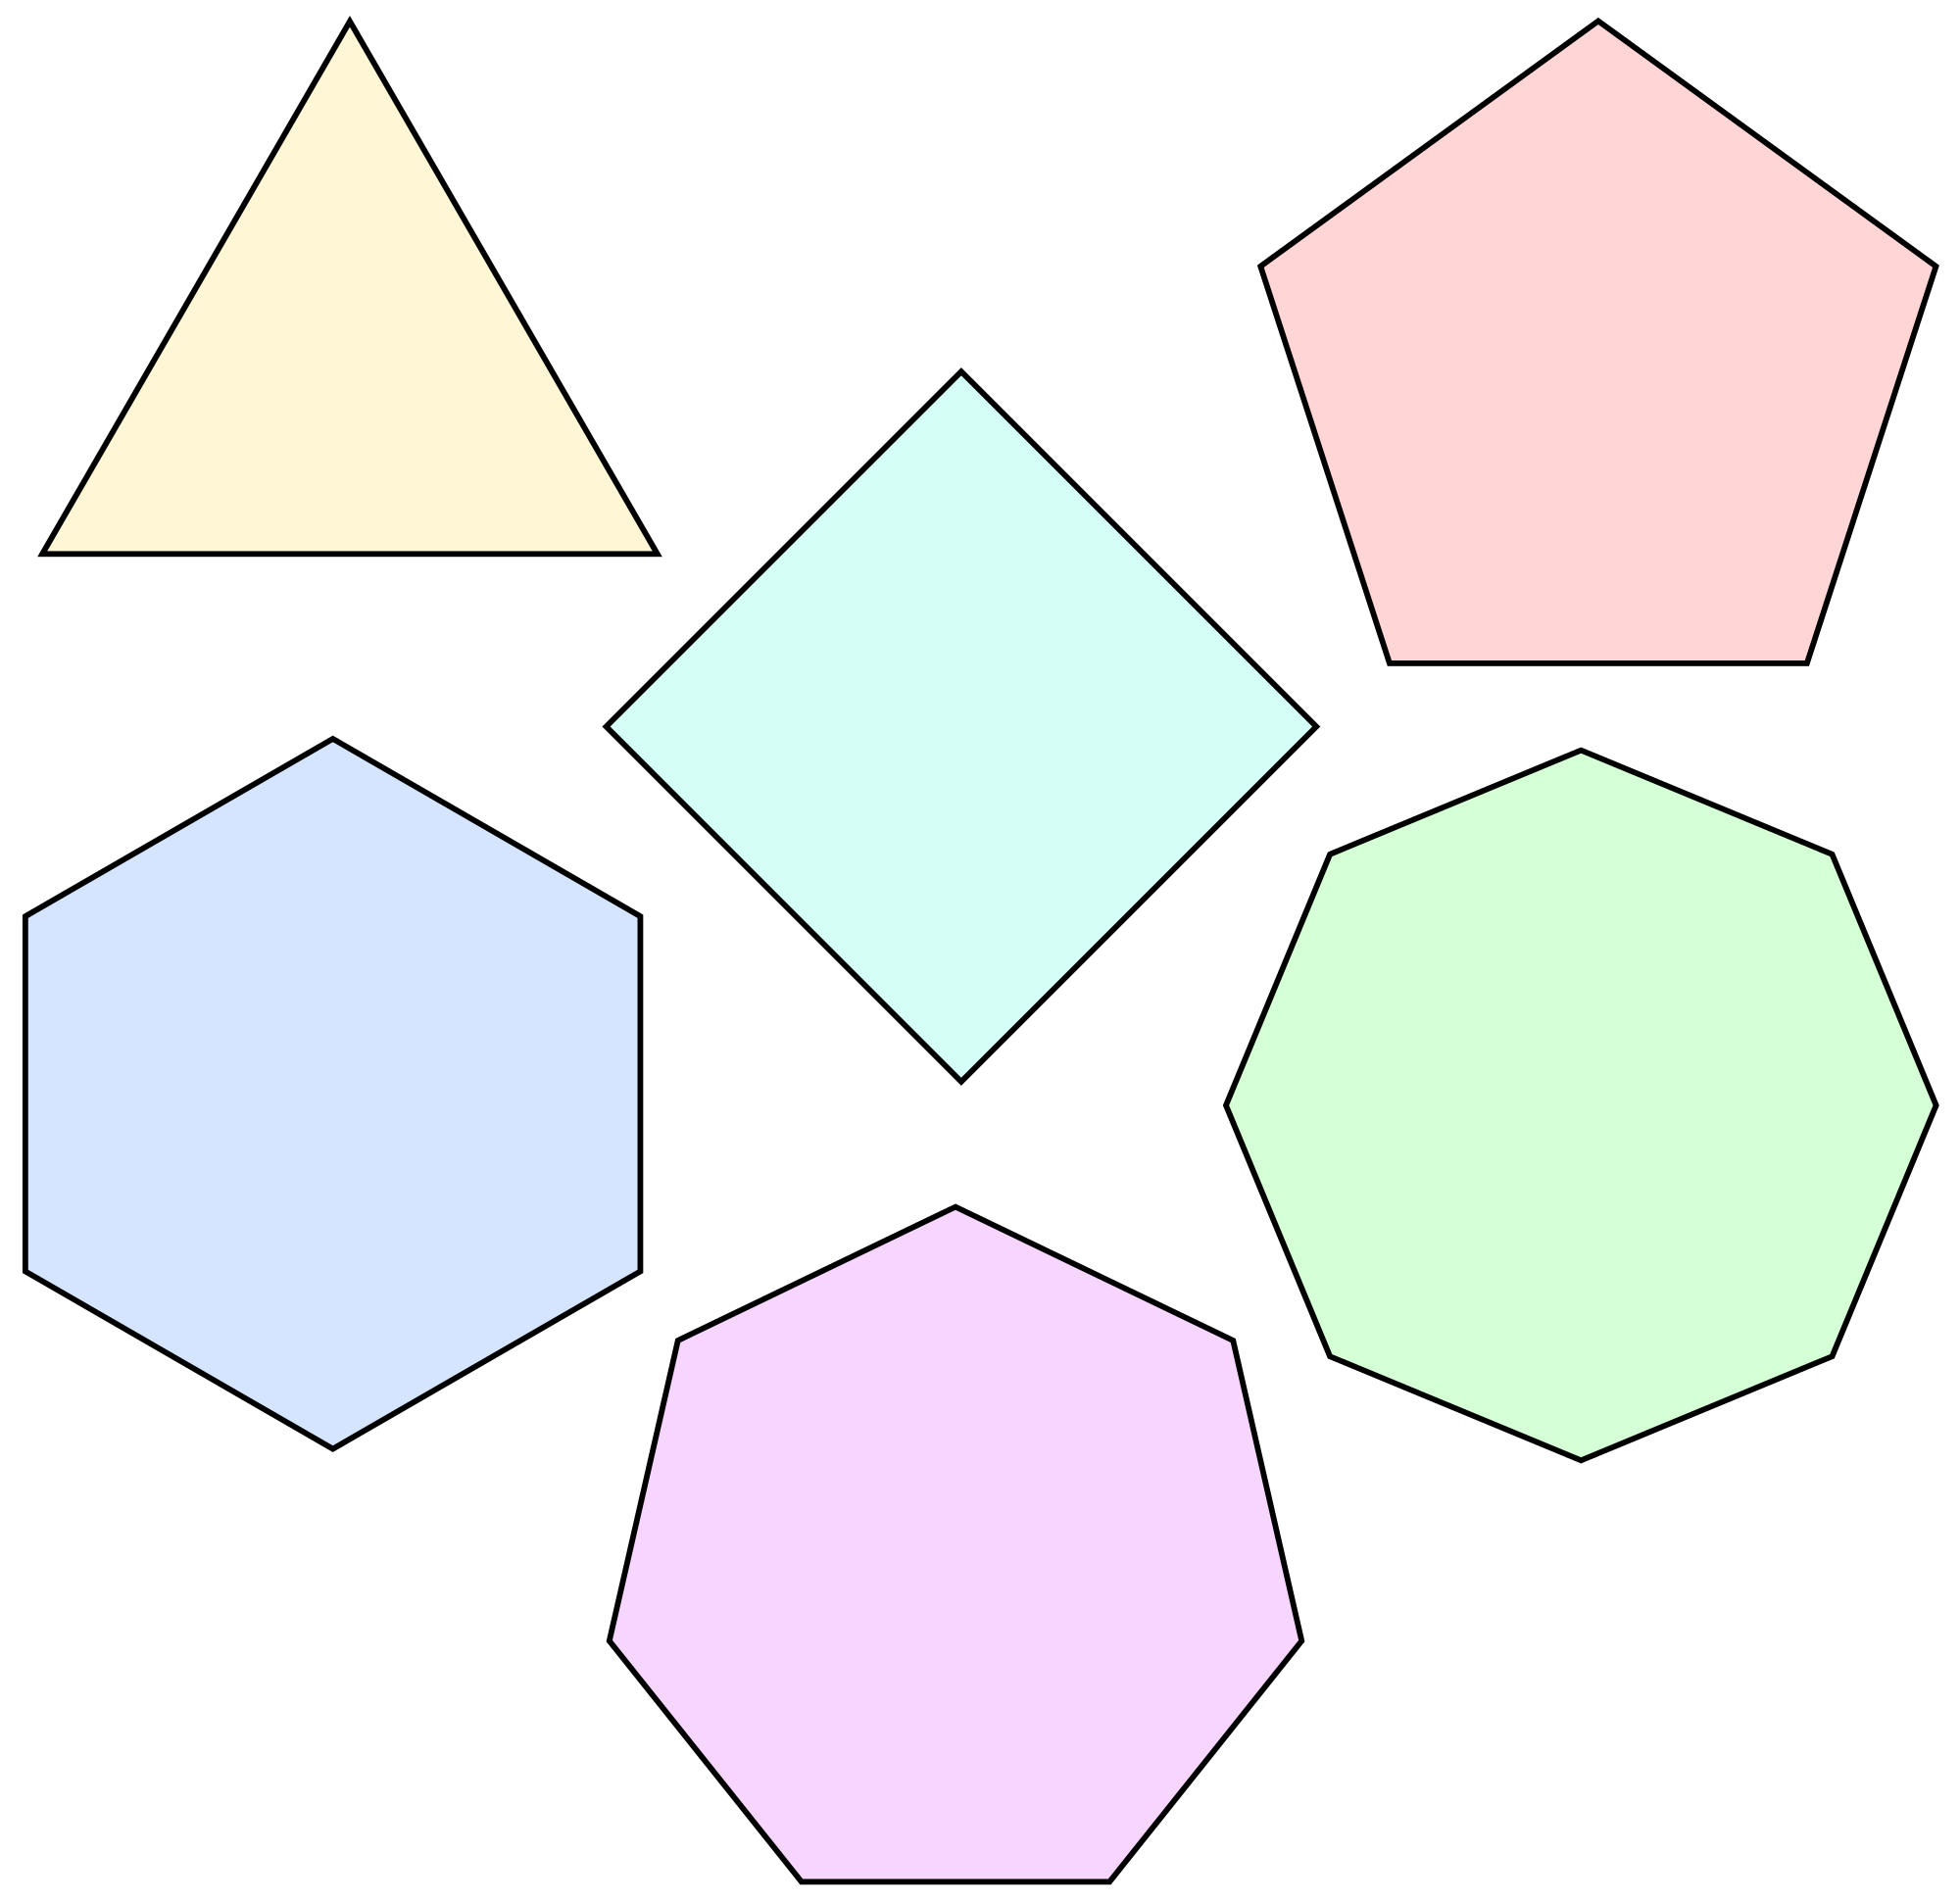 File:Regular polygons qtl1.svg